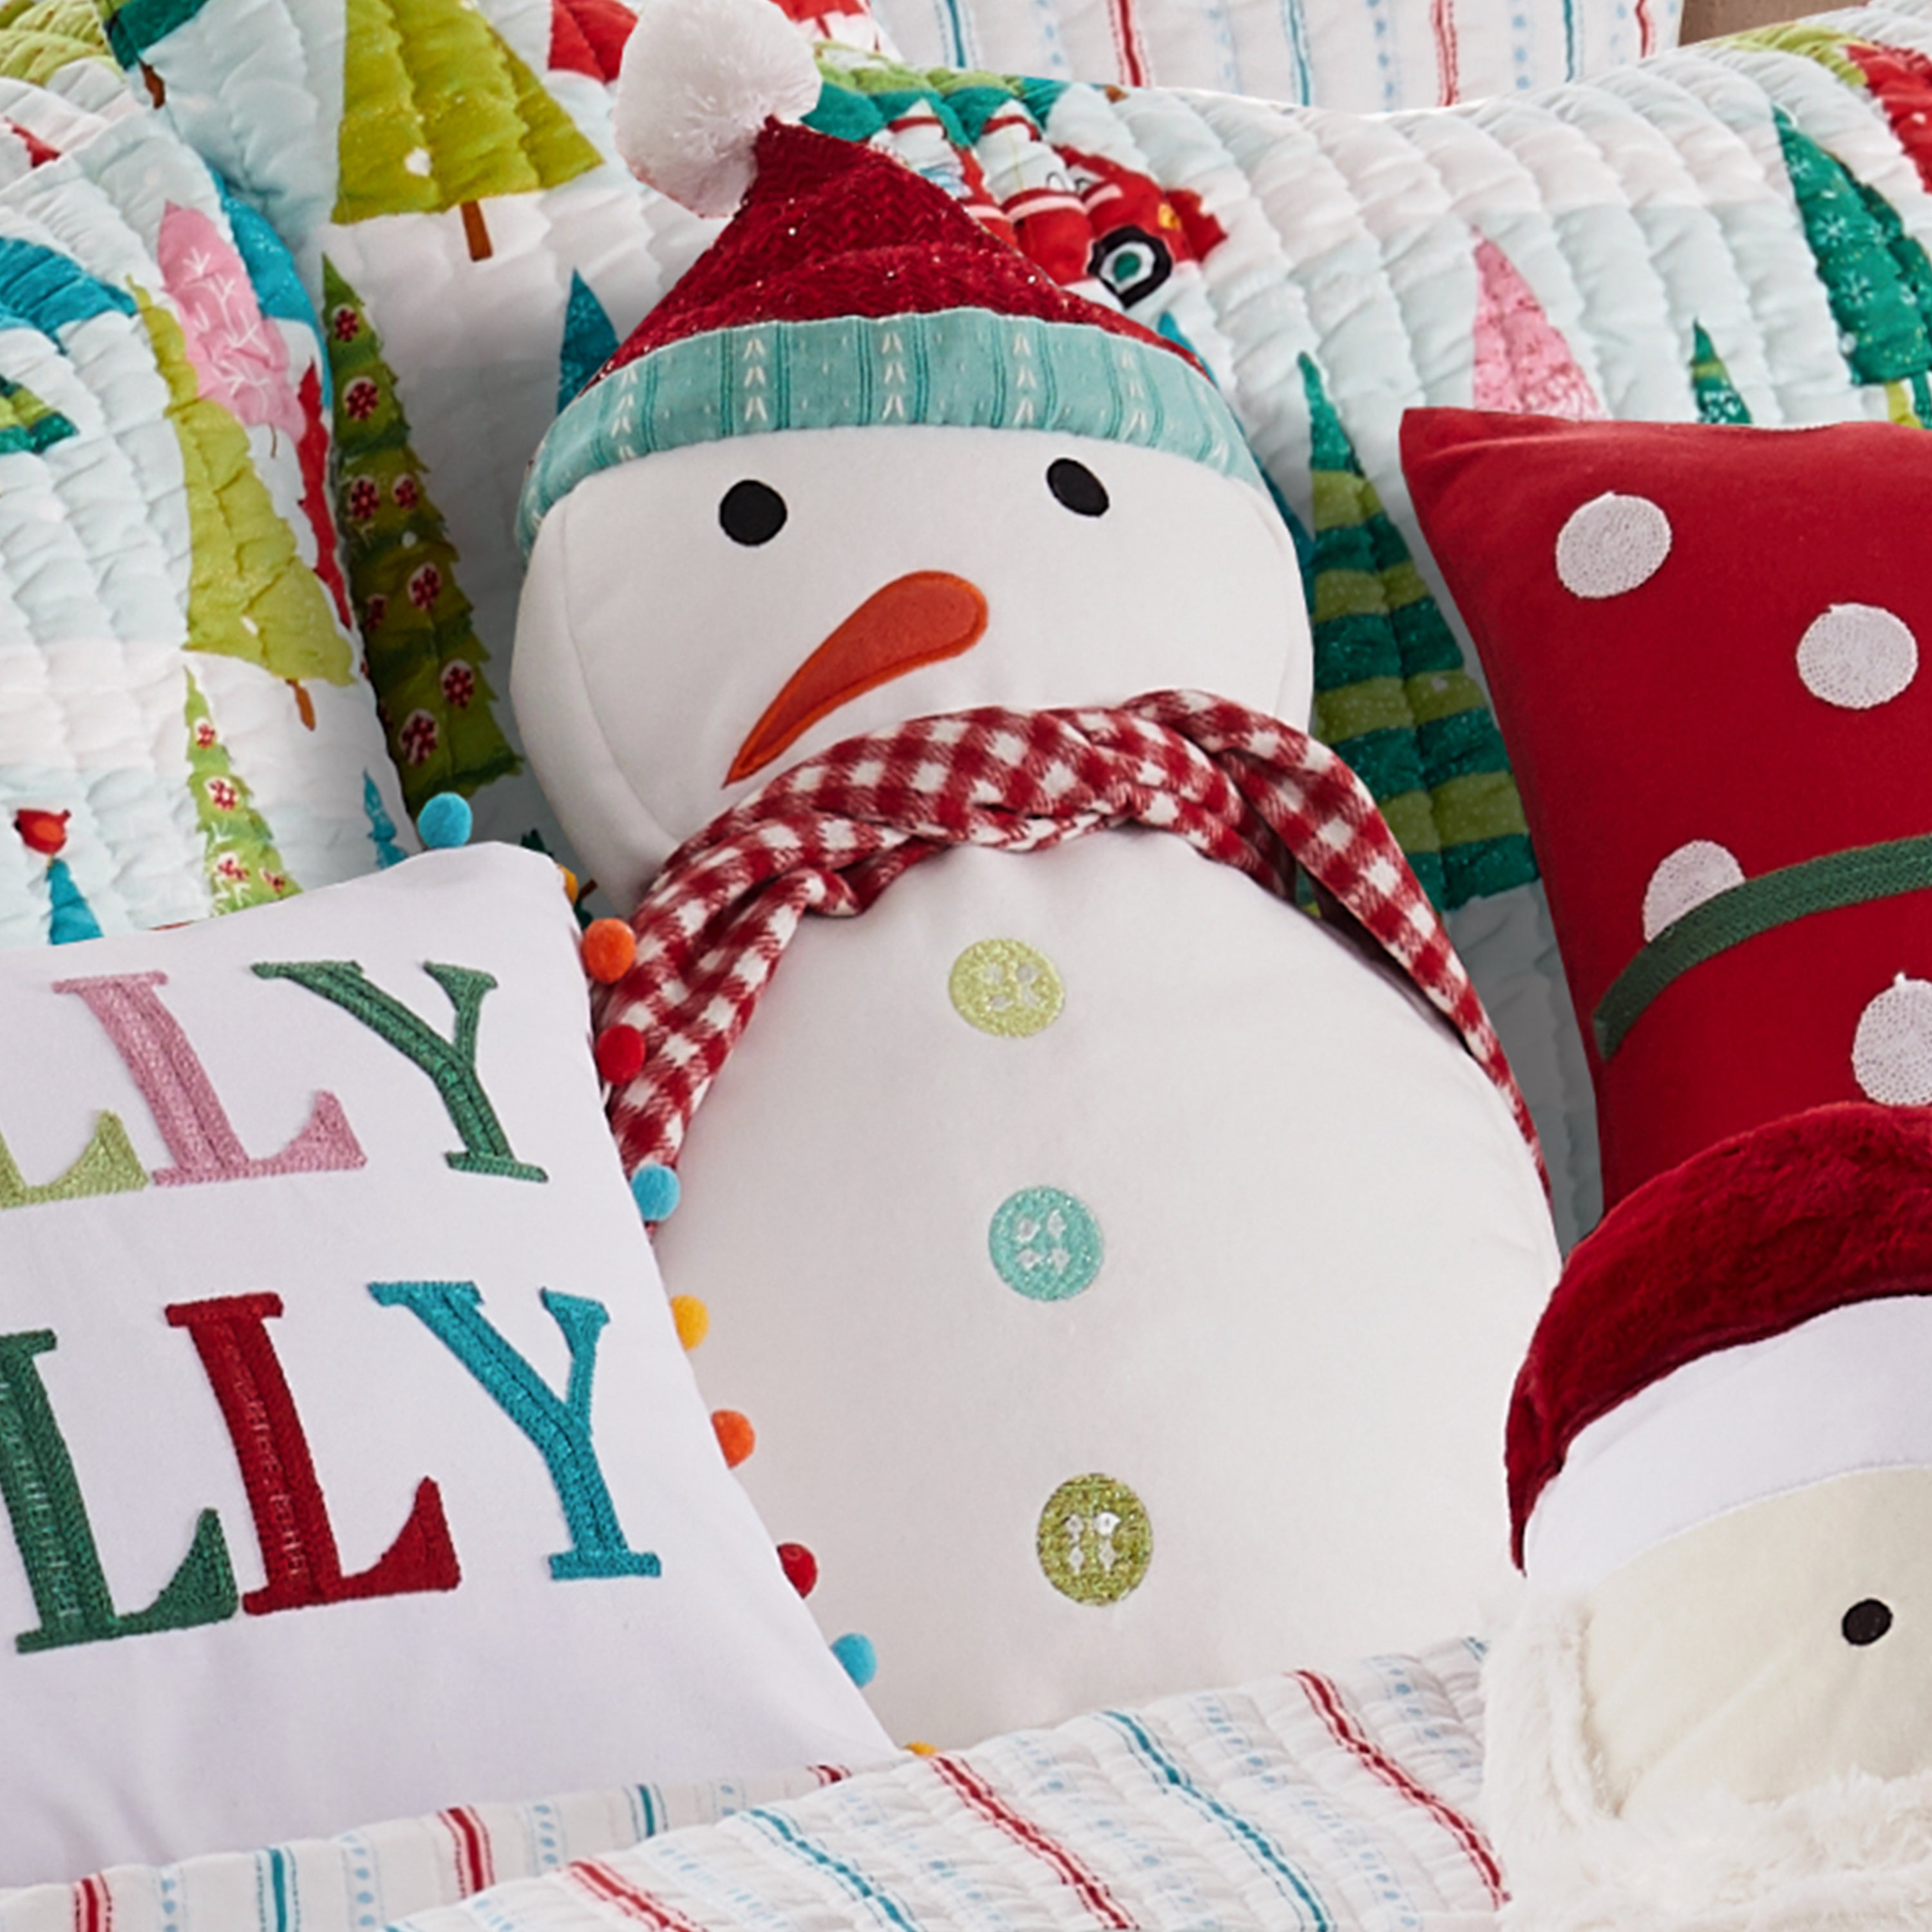 Merry & Bright Holly Jolly Snowman Pillow